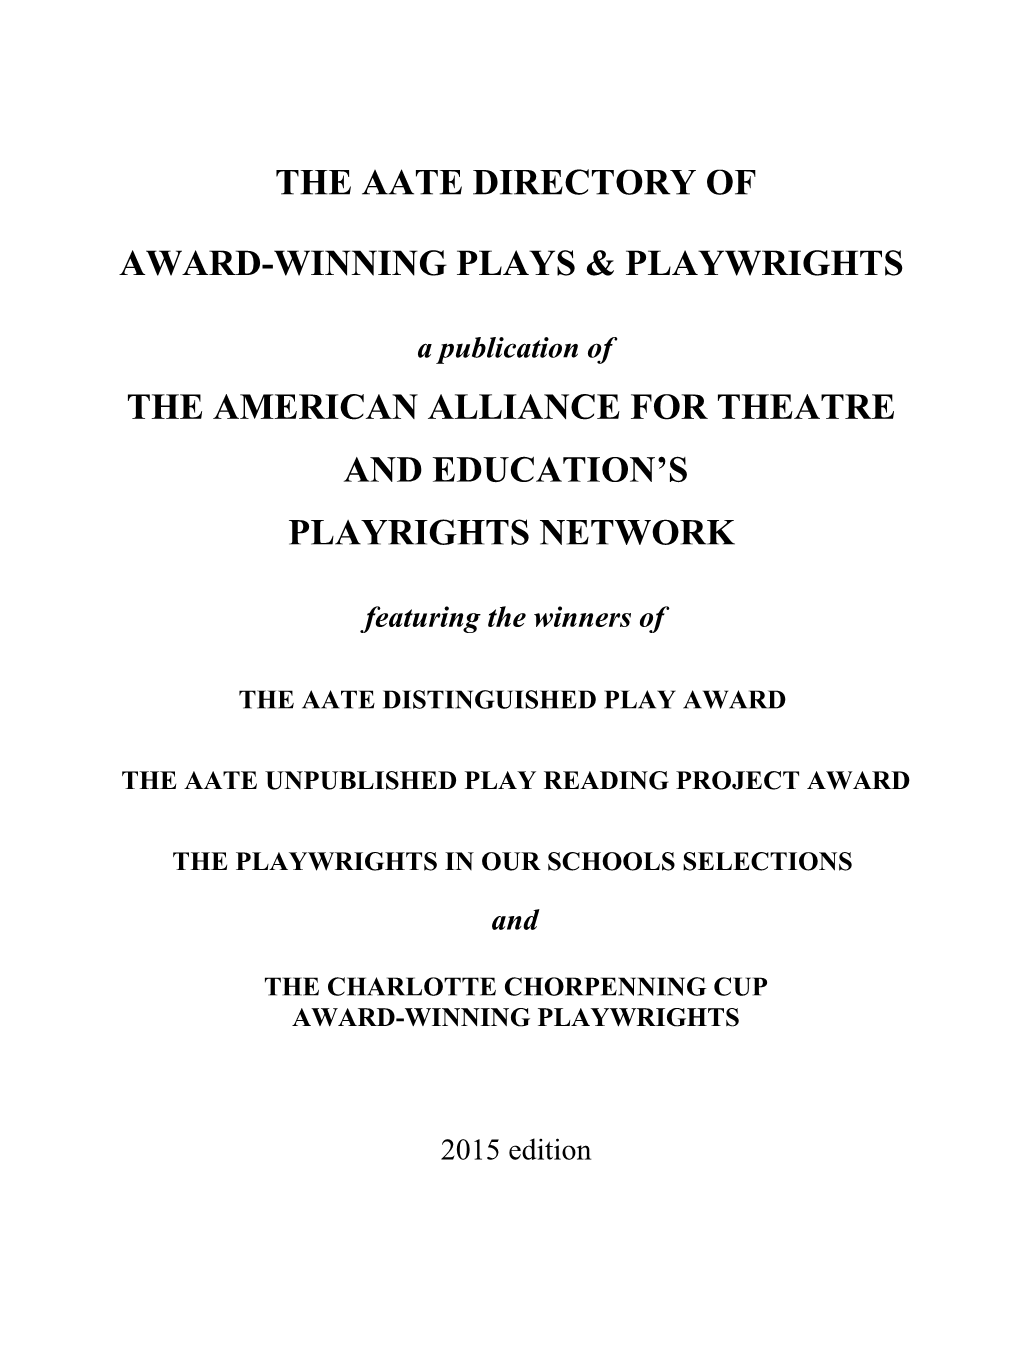 Aate Award Winning Plays 201